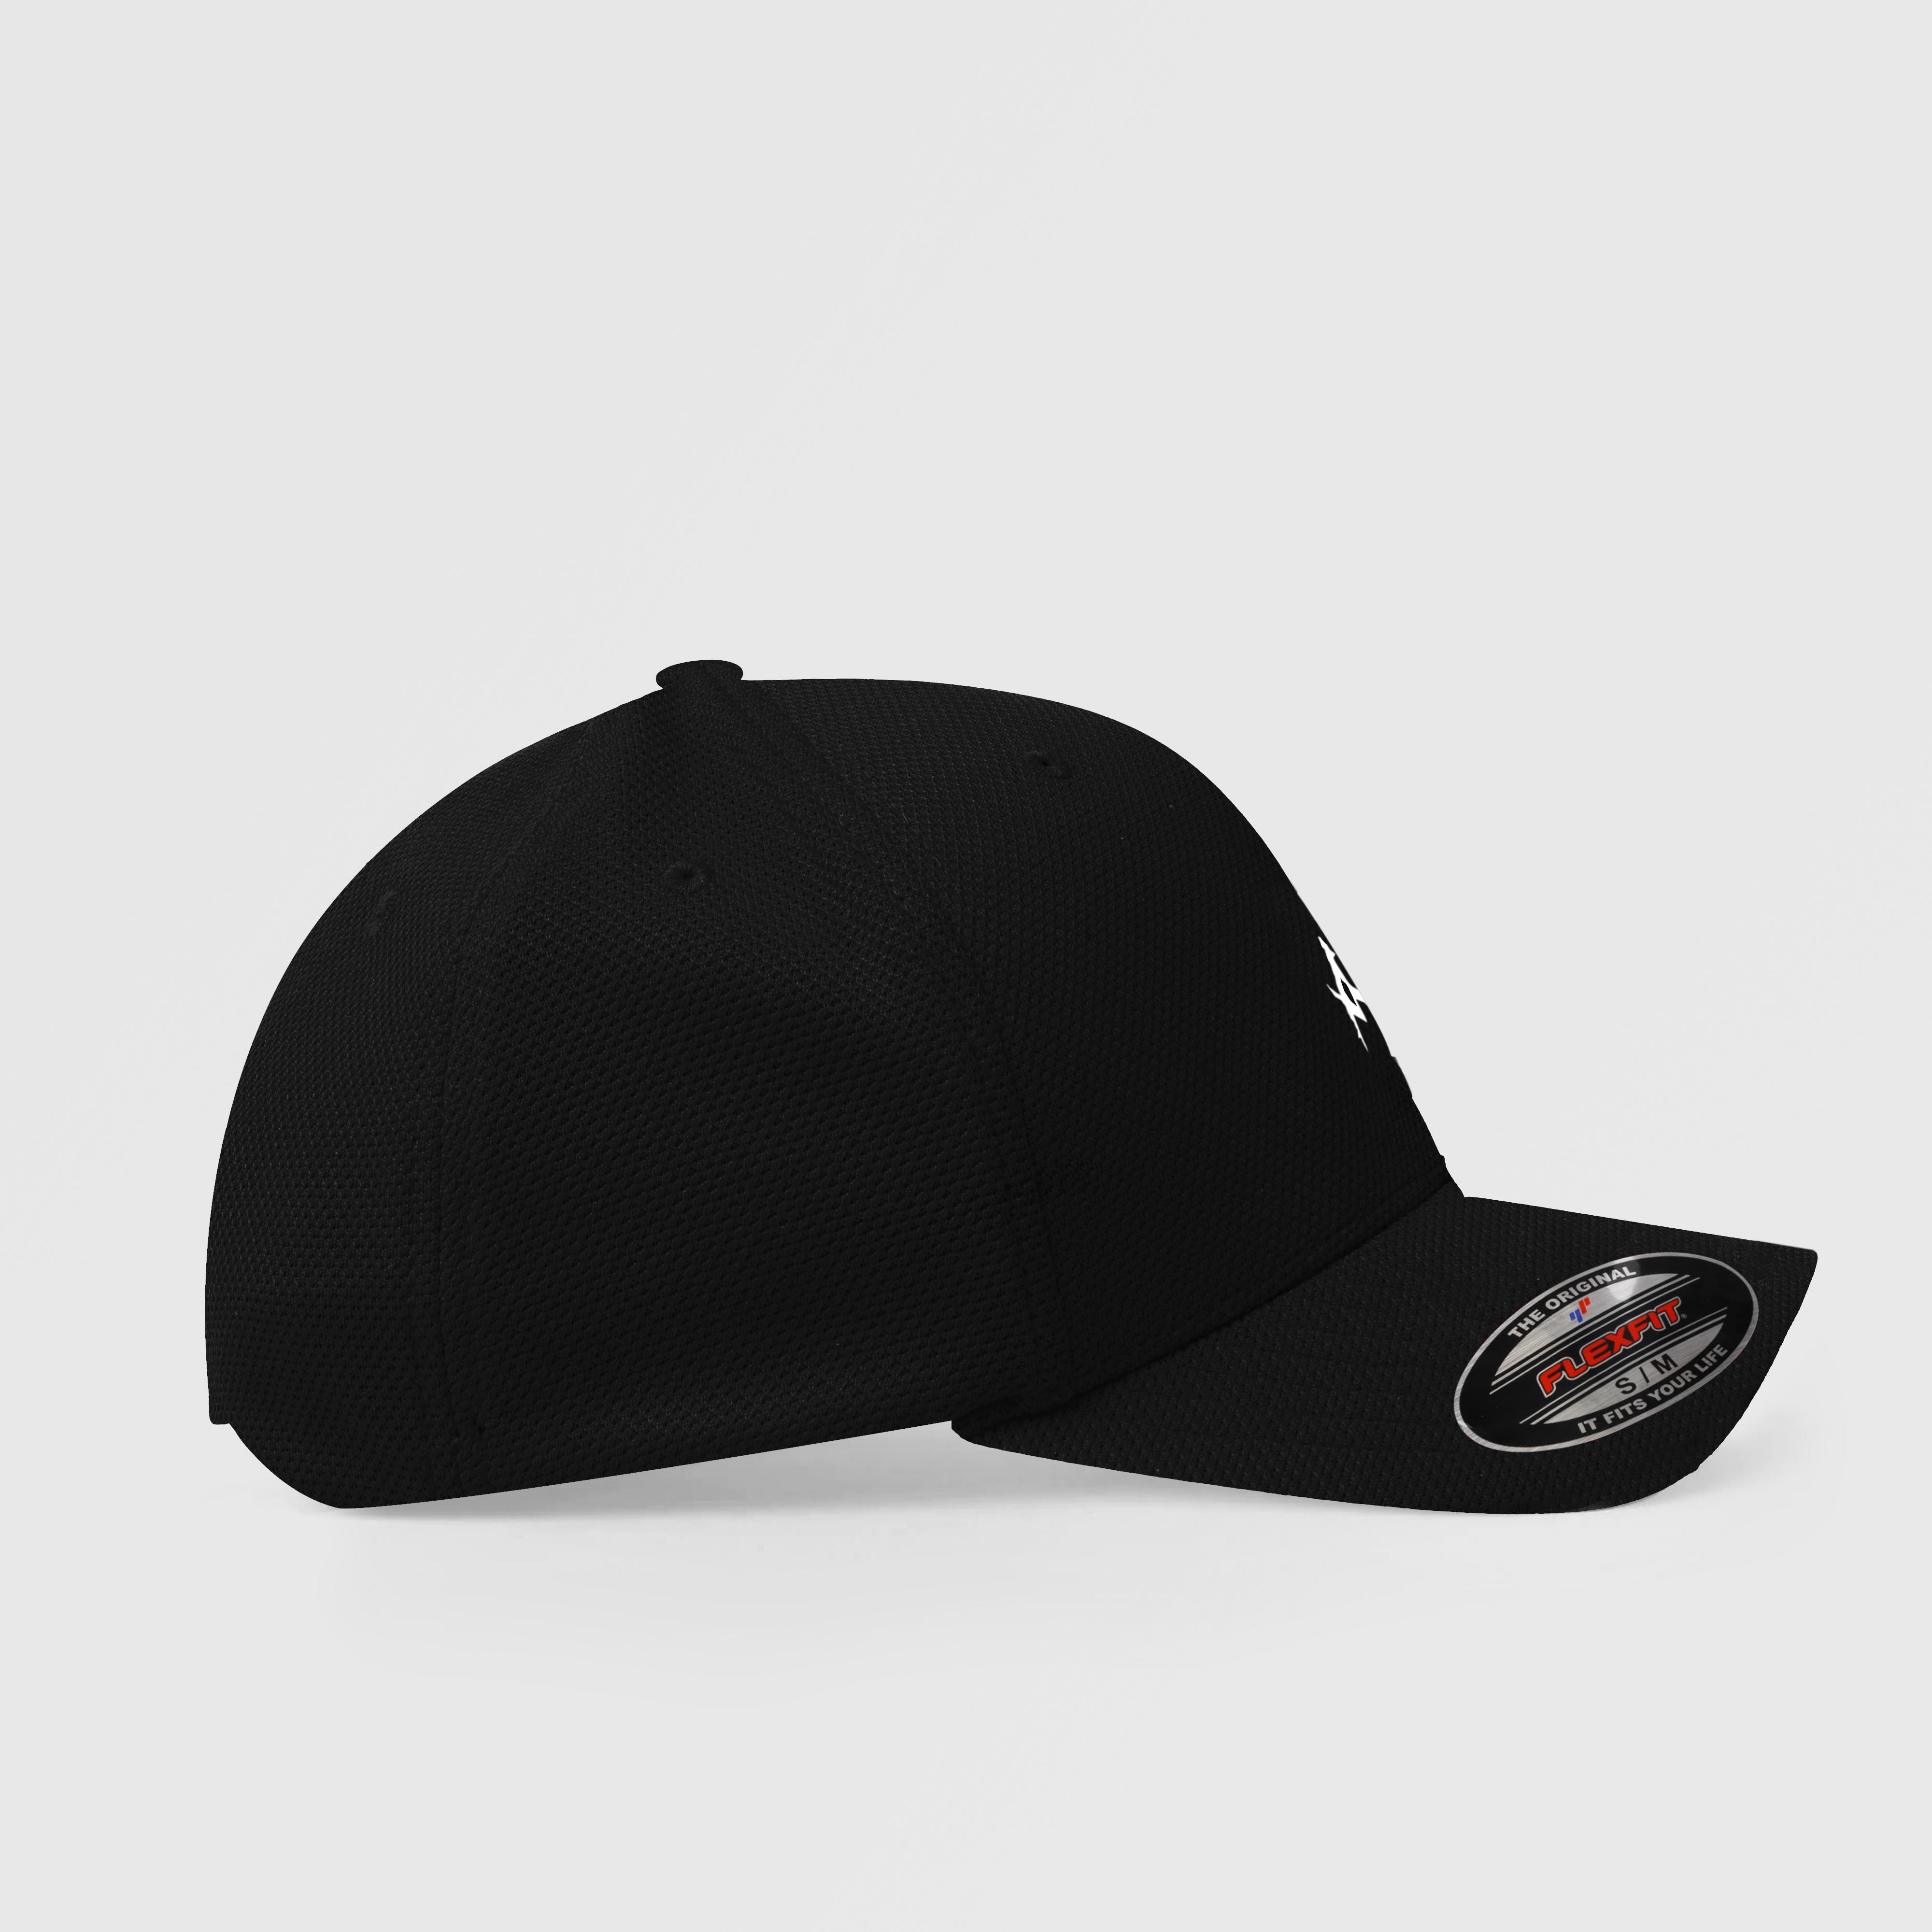 Pro Profile GA Cap (Black)